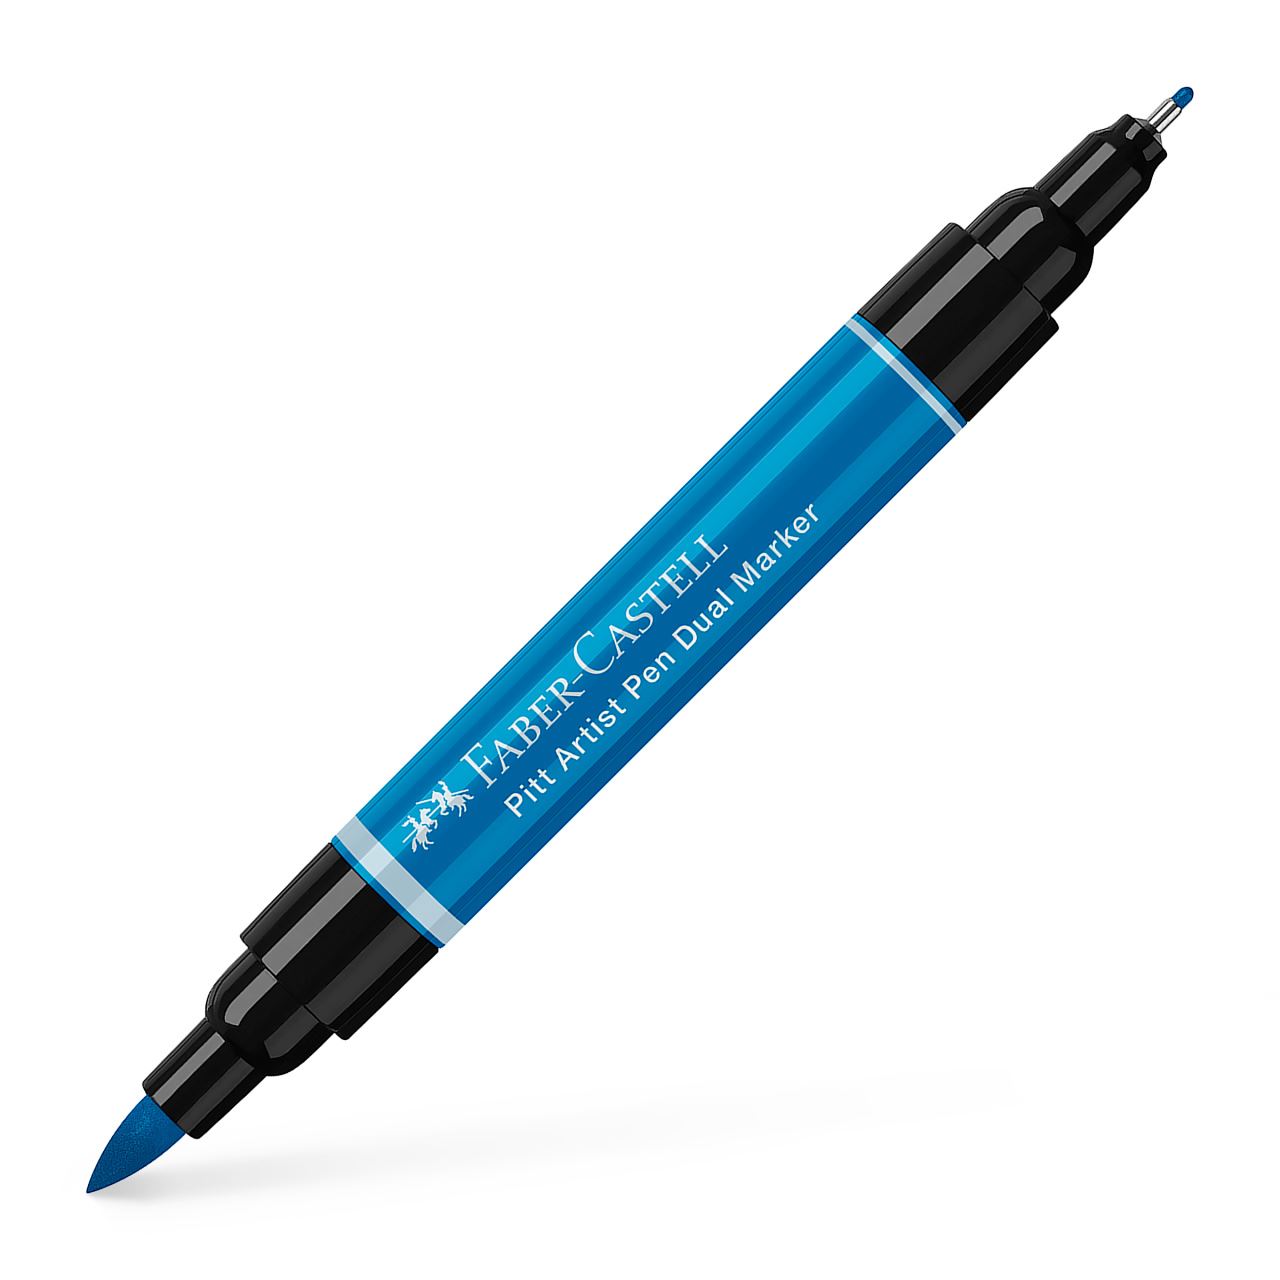 Faber-Castell - Feutre Pitt Artist Pen Double Pointe, bleu phthalo